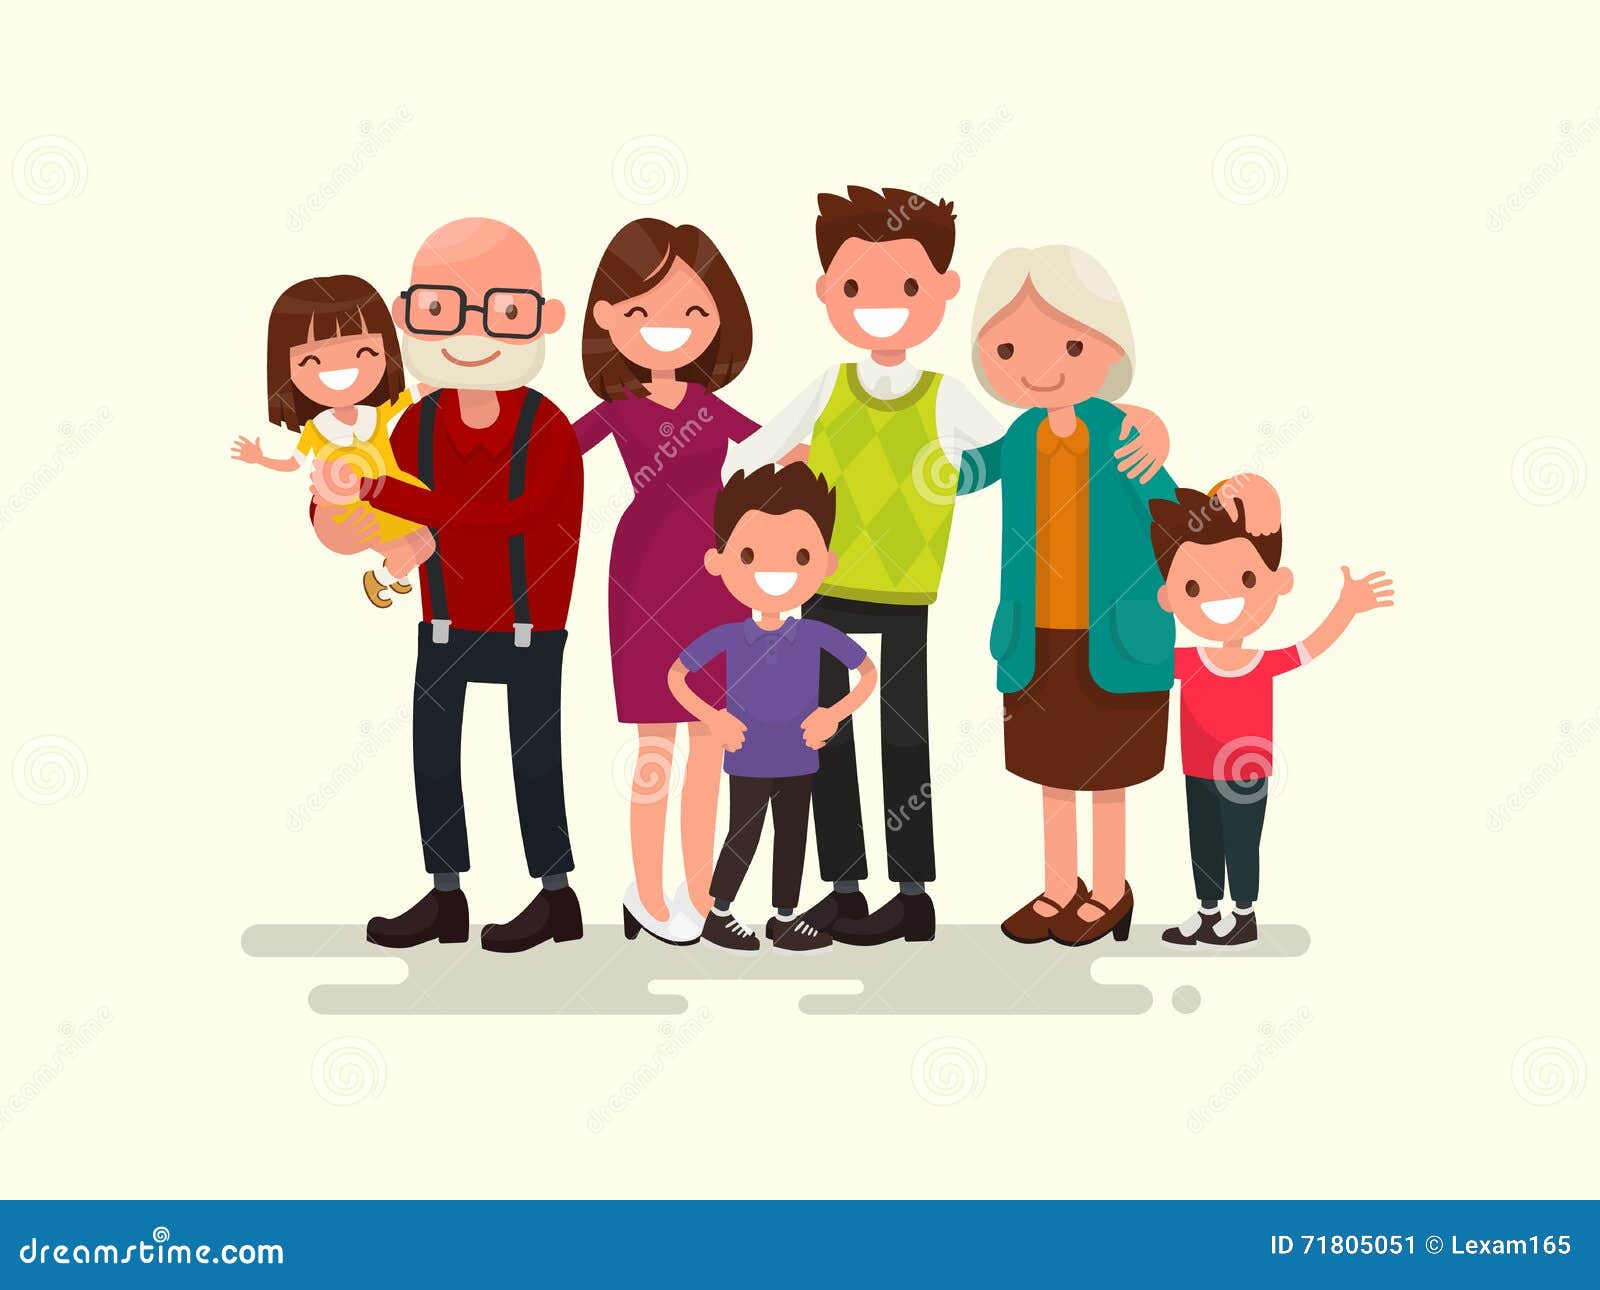 Download Big Family Together. Vector Illustration Stock ...